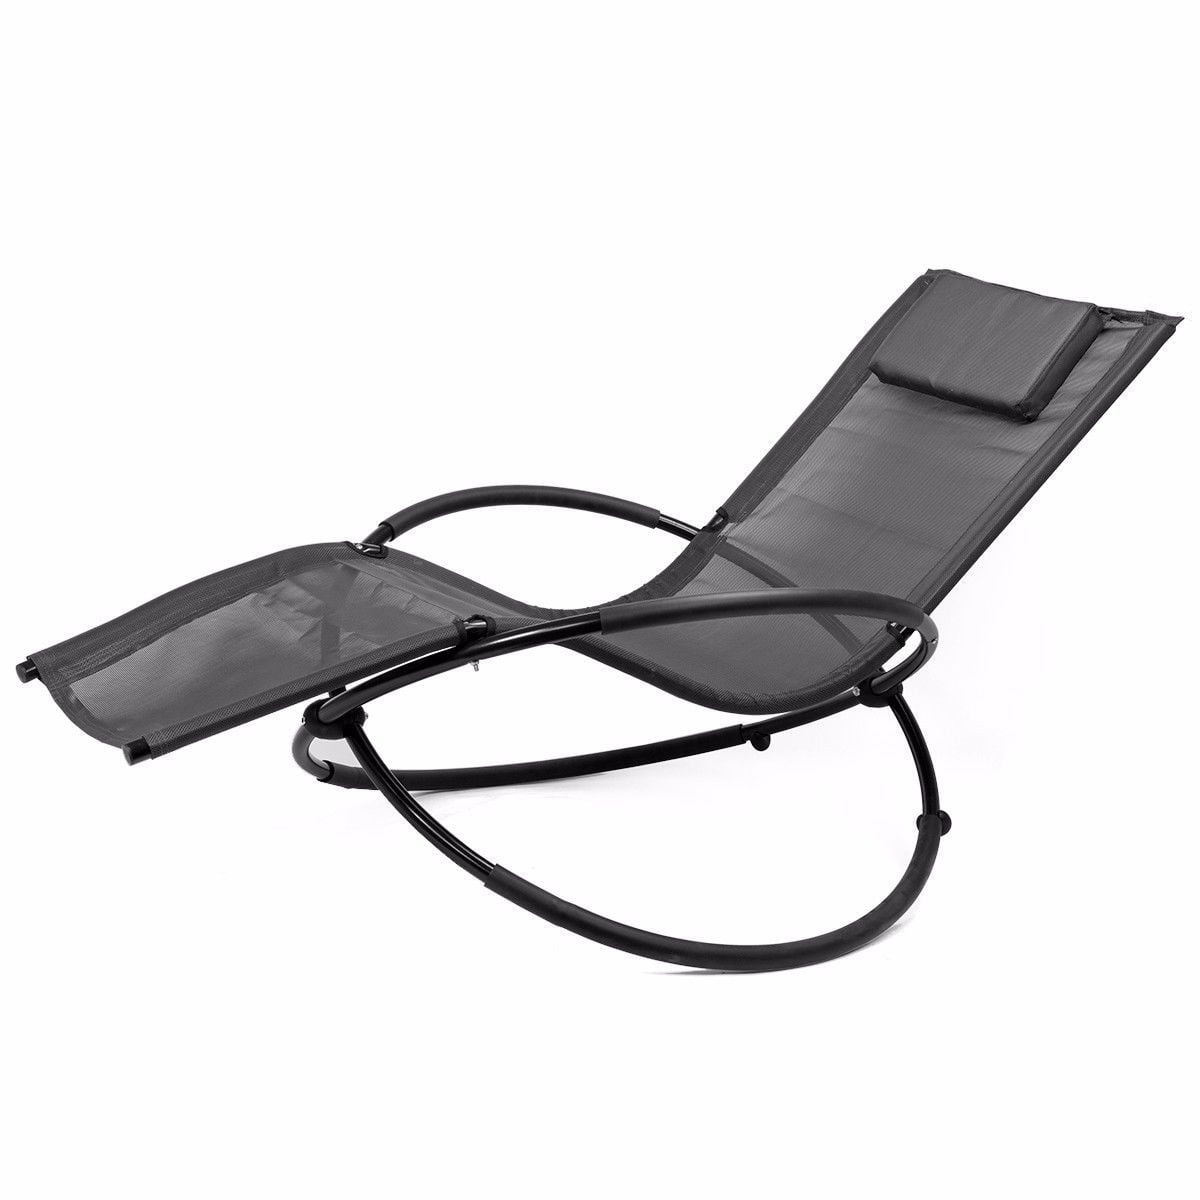 Tan Folding Orbit Zero Gravity Chair Patio Garden Lounger Rocking Relax Outdoor 